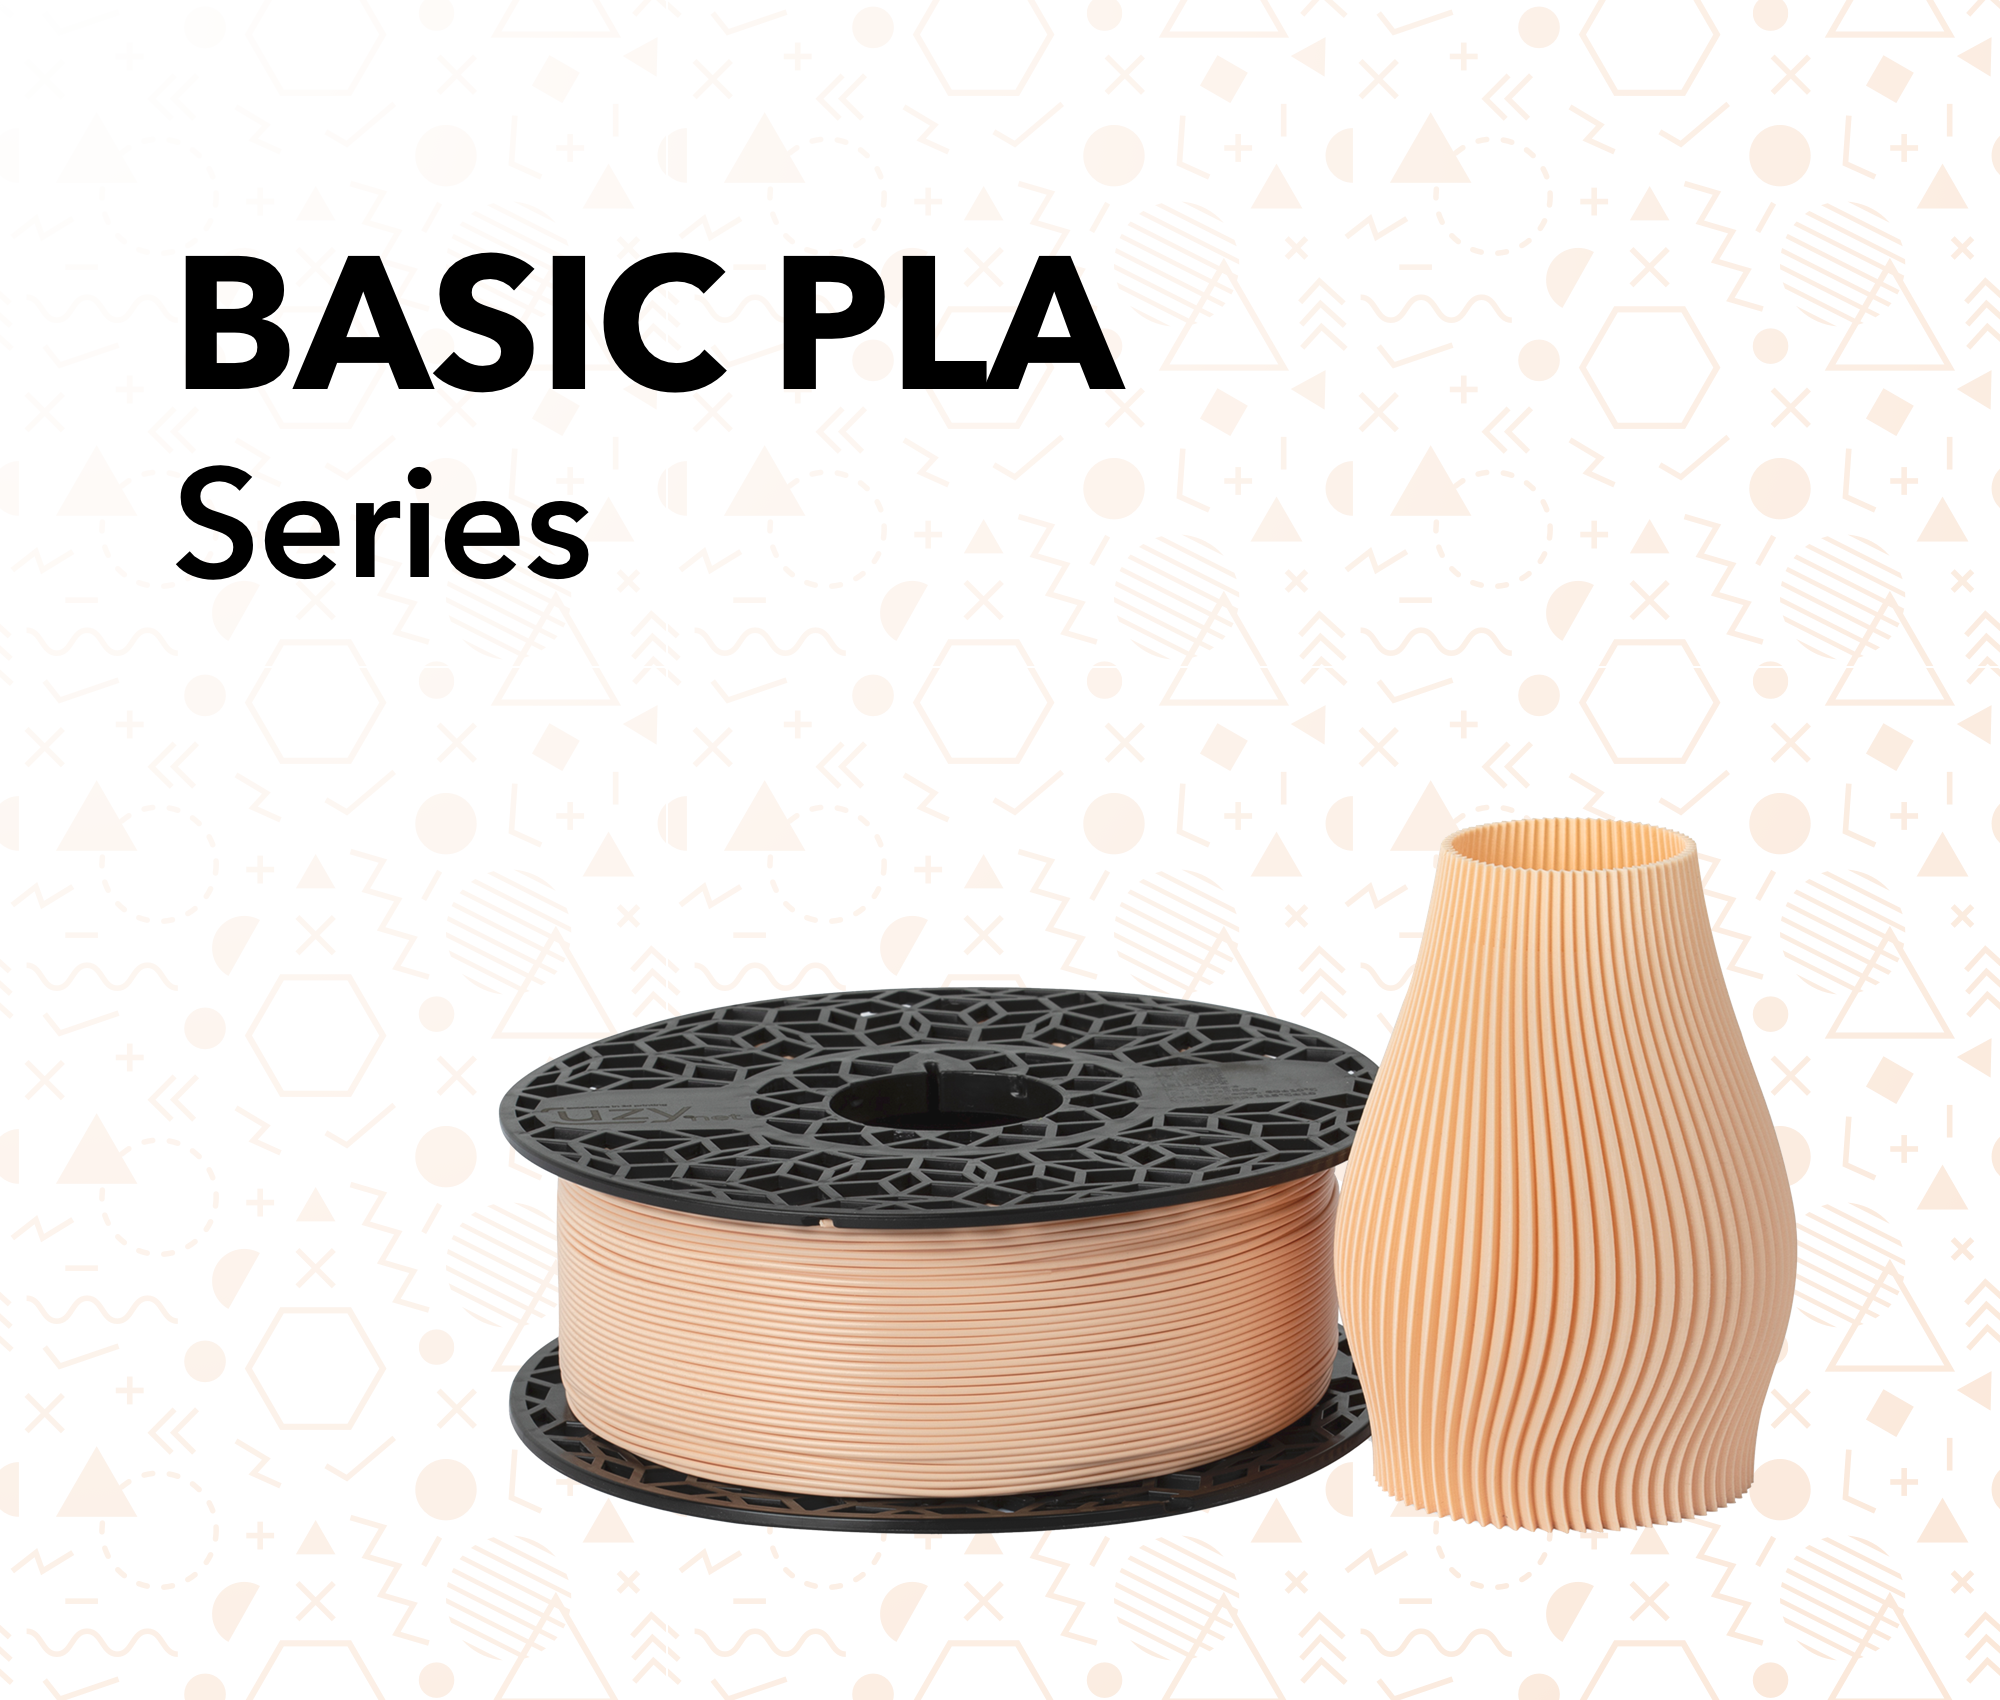 Basic PLA Series